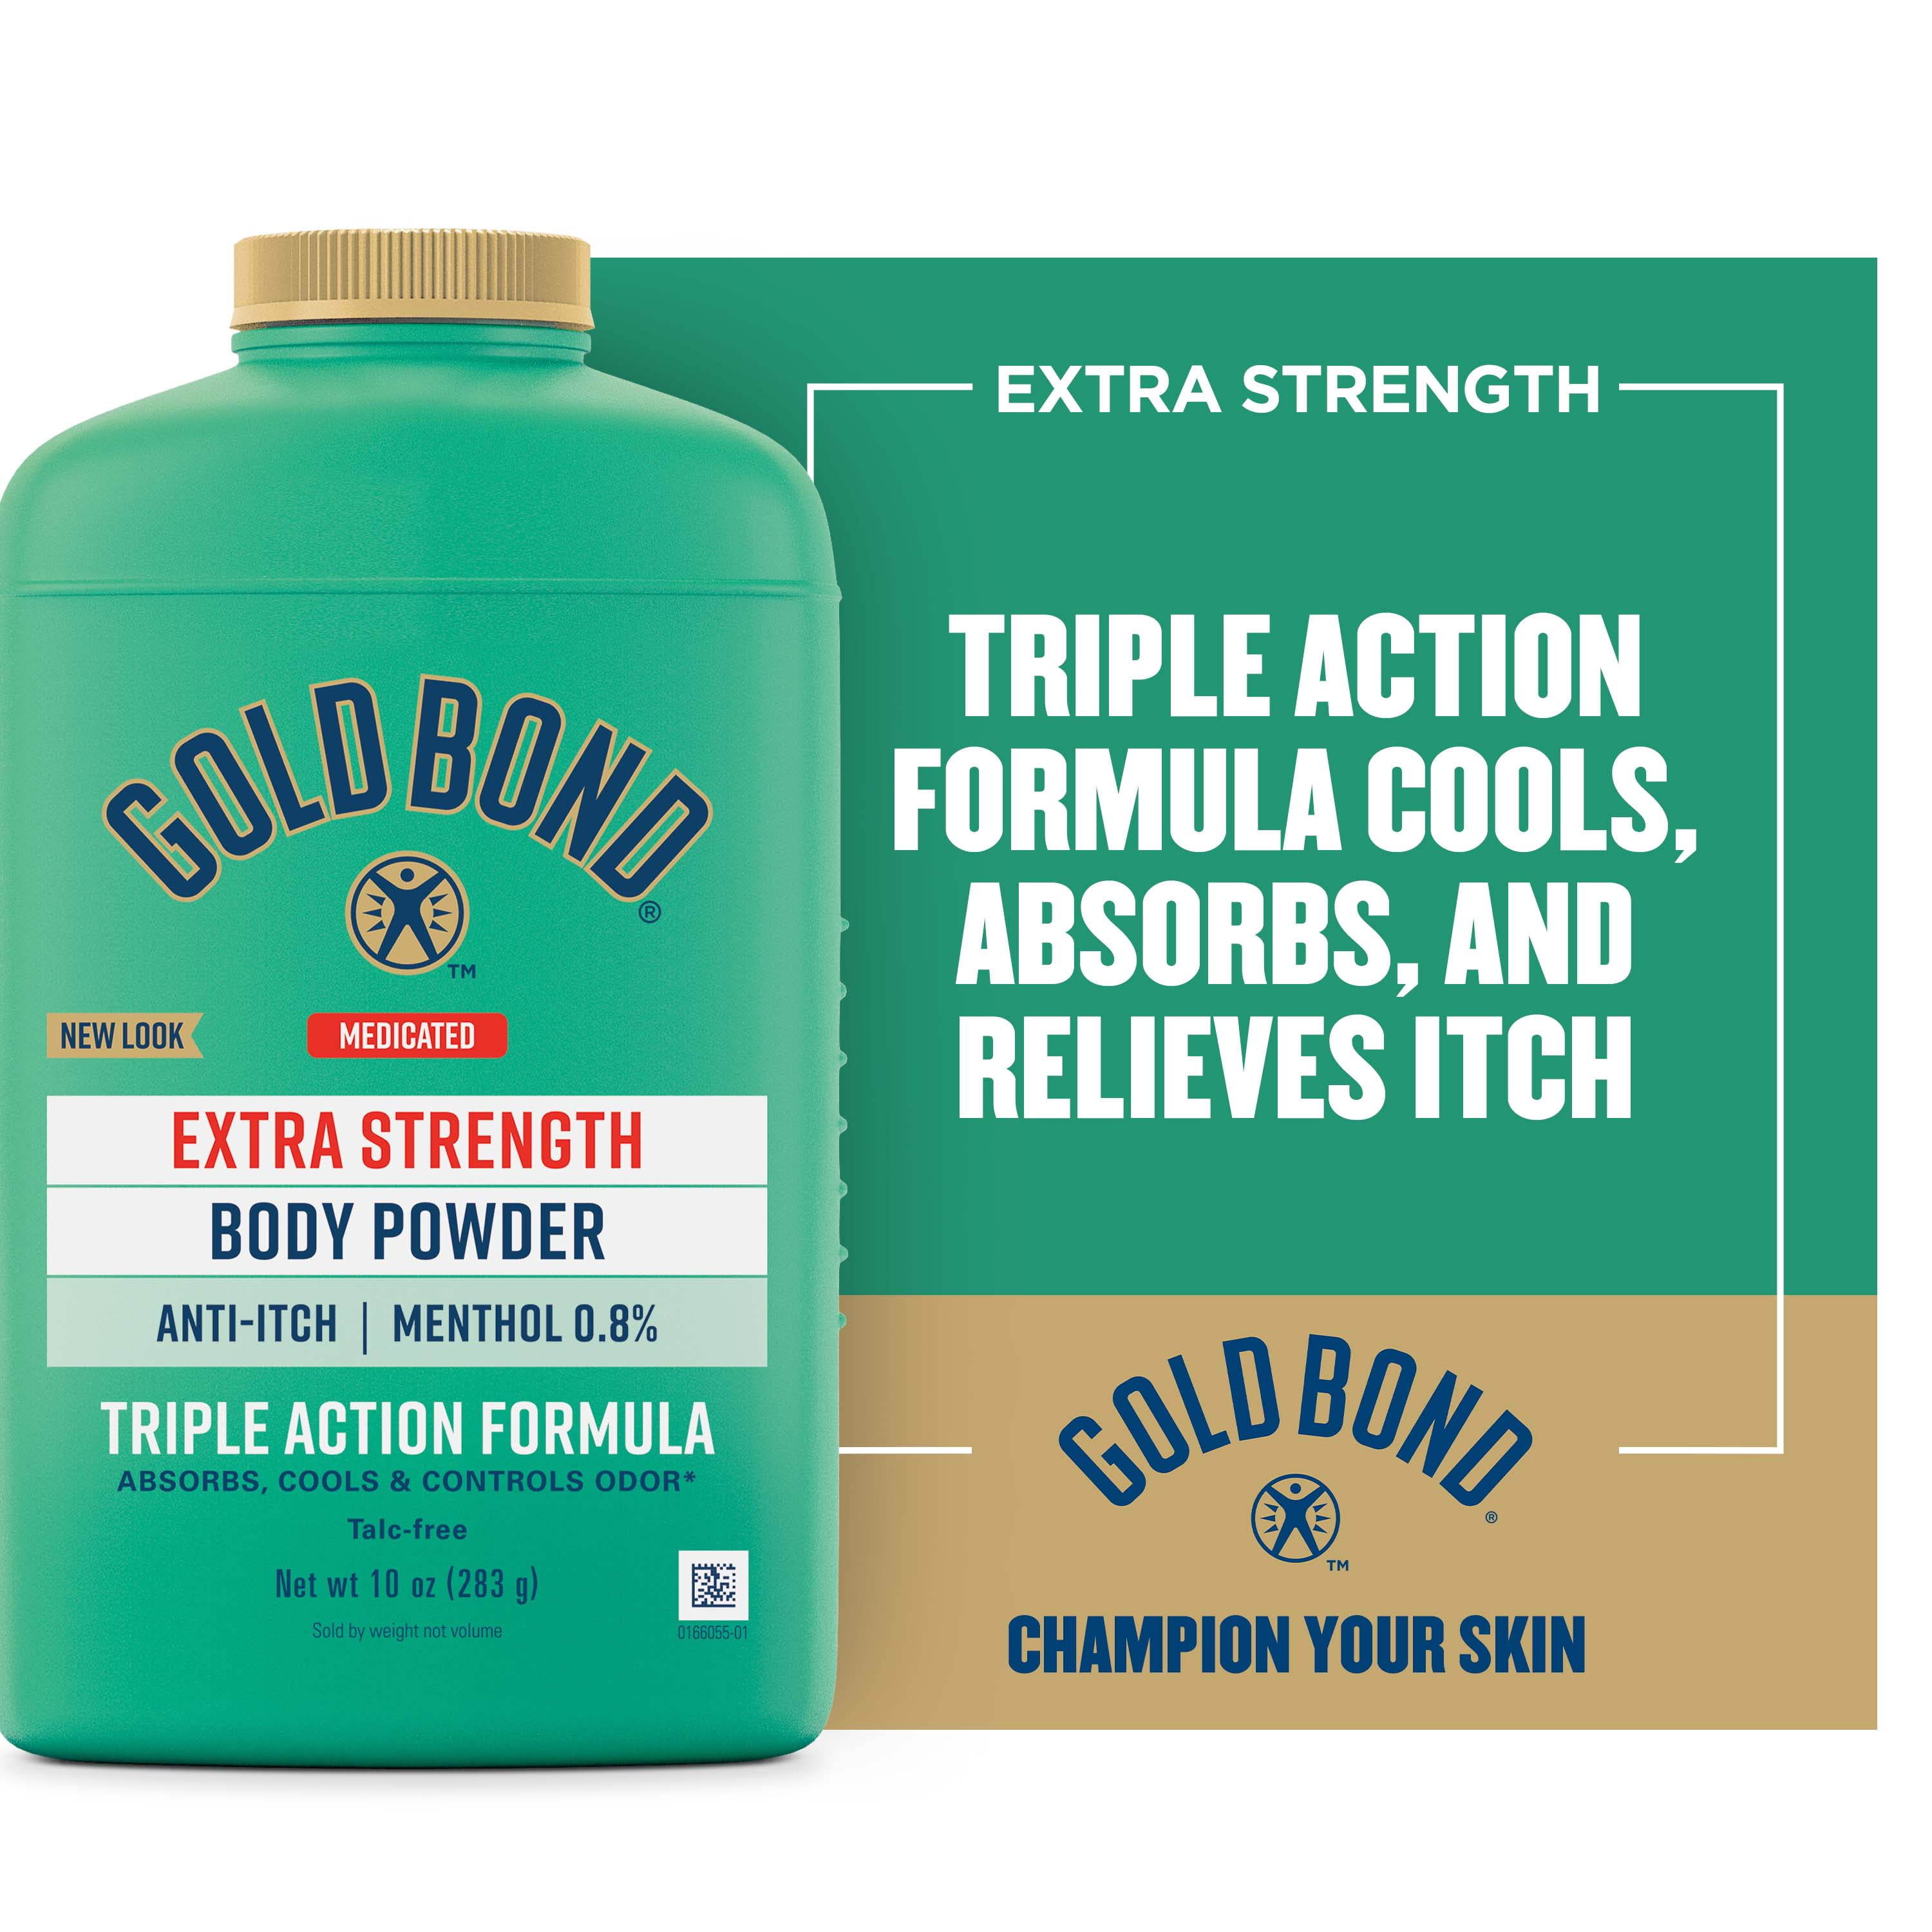 Gold Bond Medicated Talc-Free Extra Strength Body Powder, 10 oz.